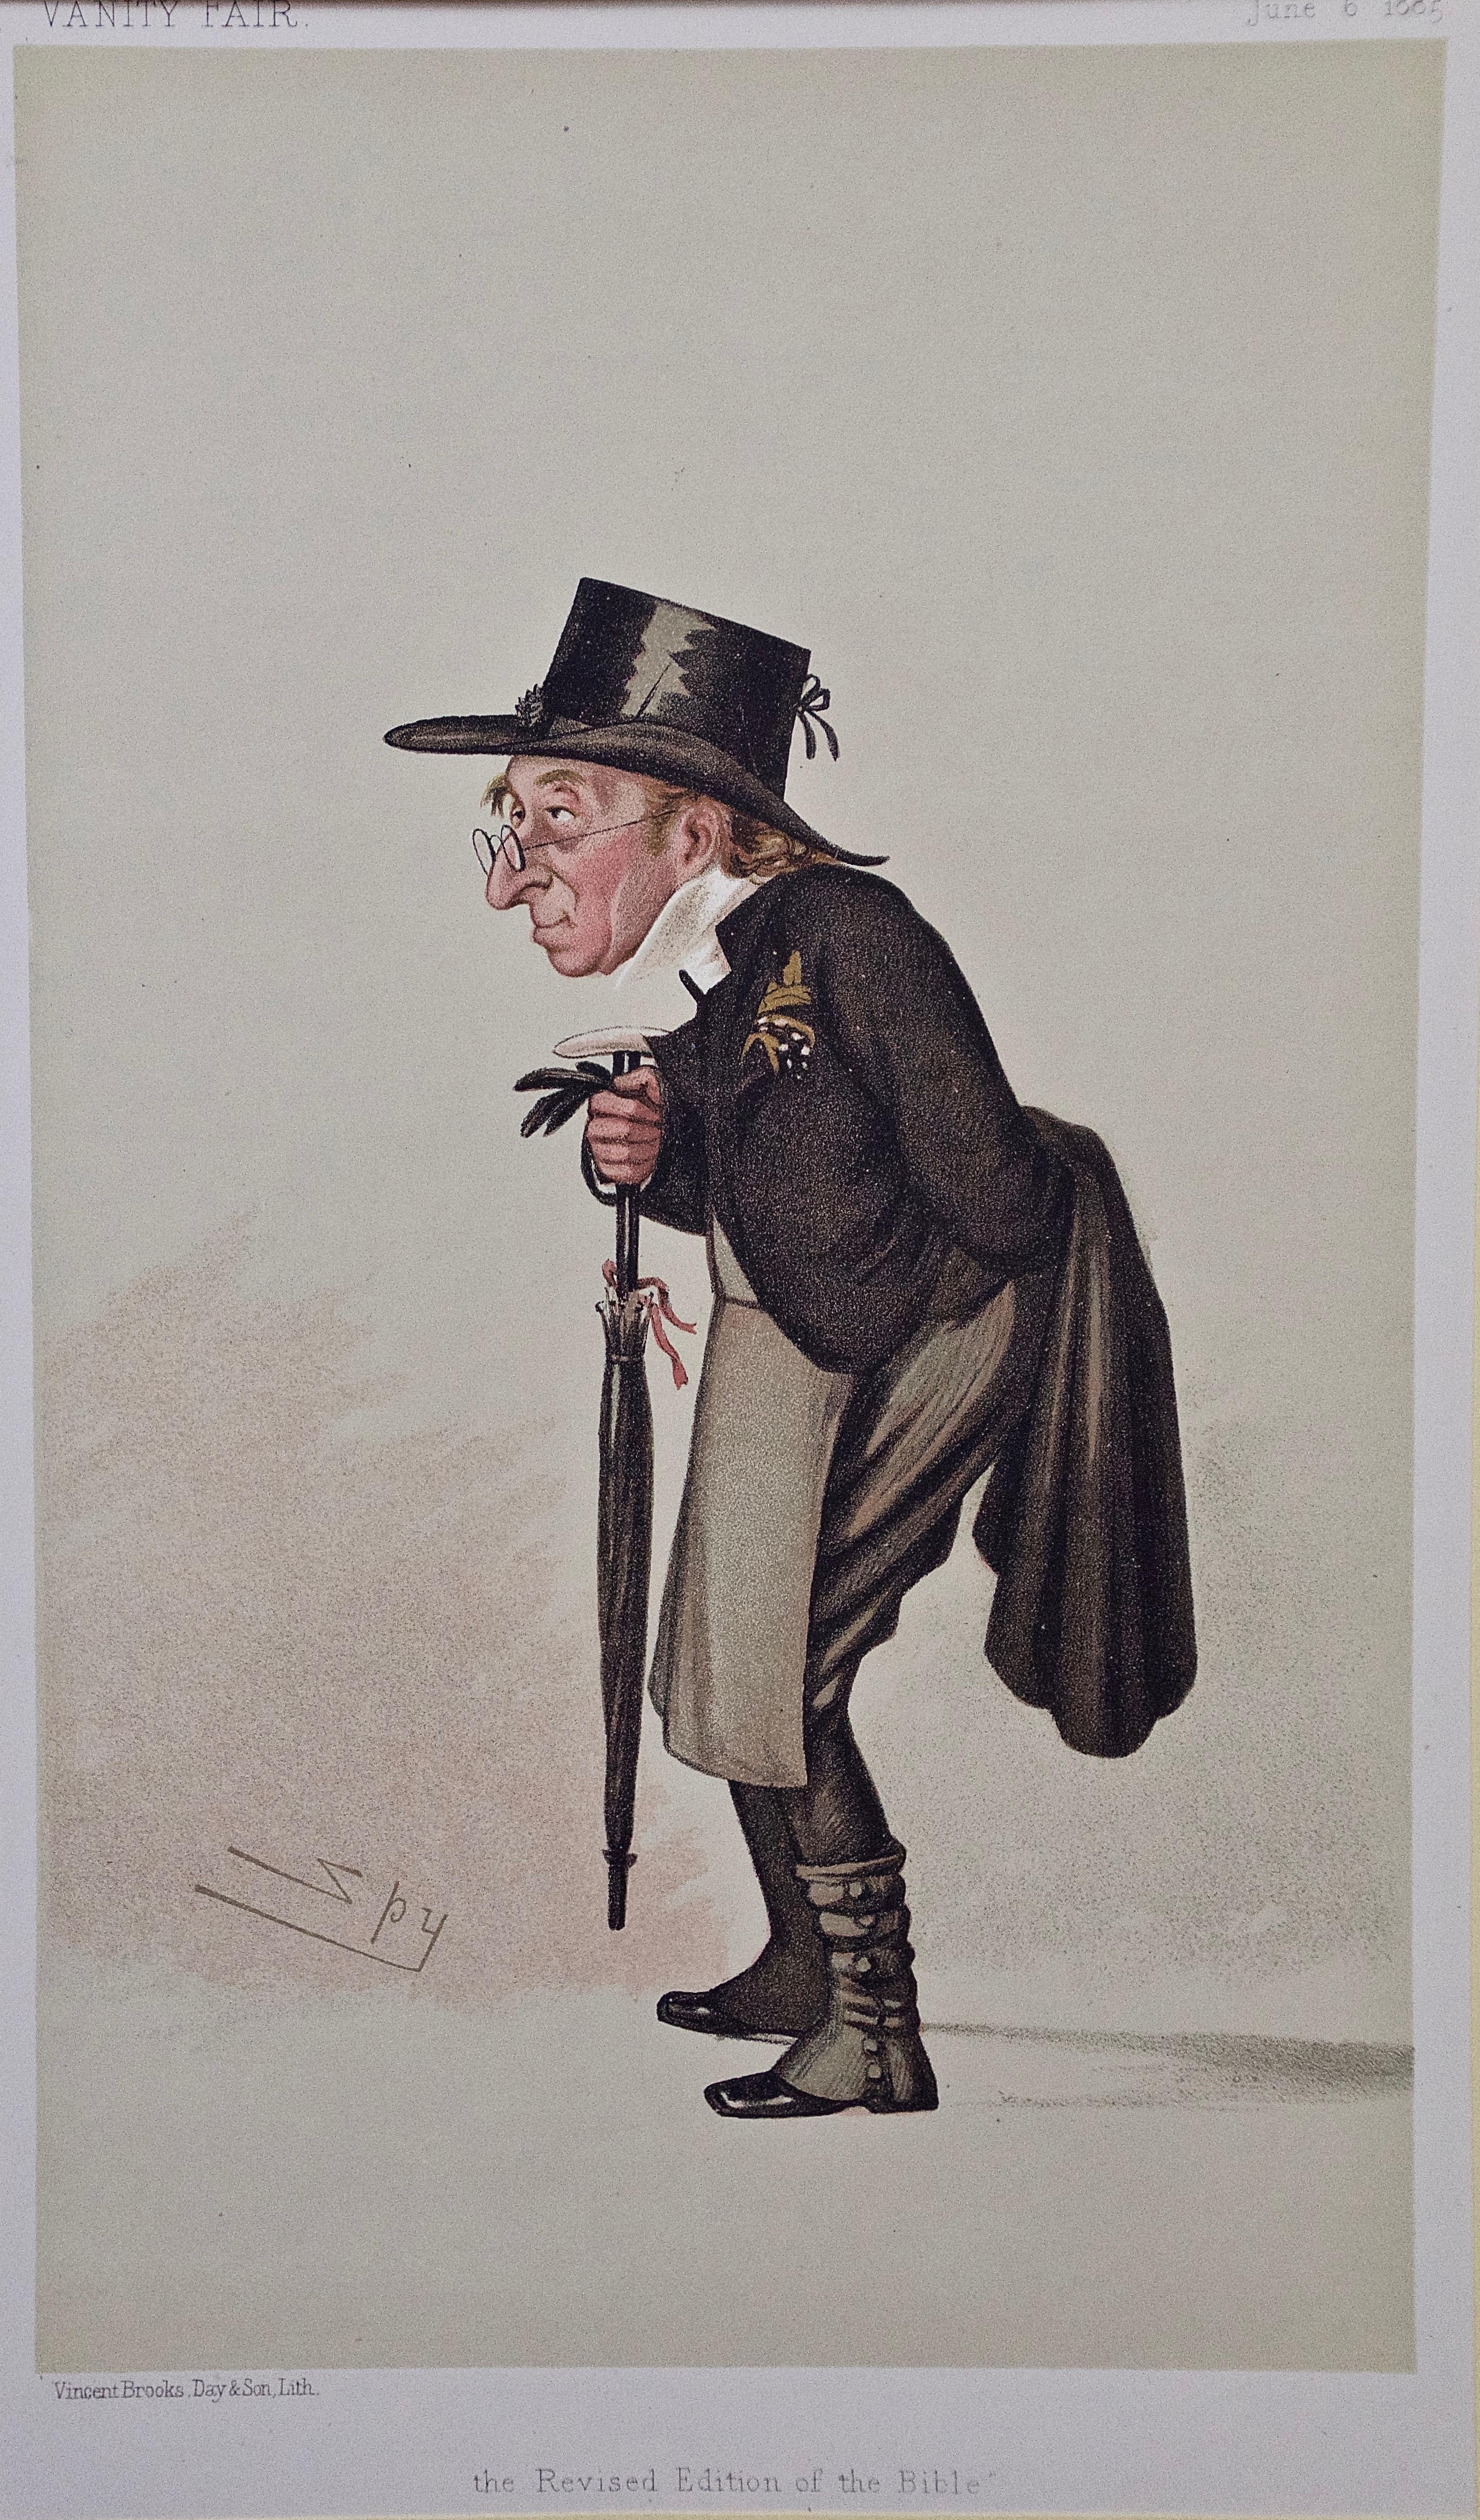 Sir Leslie Ward Portrait Print - Vanity Fair Caricature, Benjamin Harrison "Revised Version of the Bible" by Spy